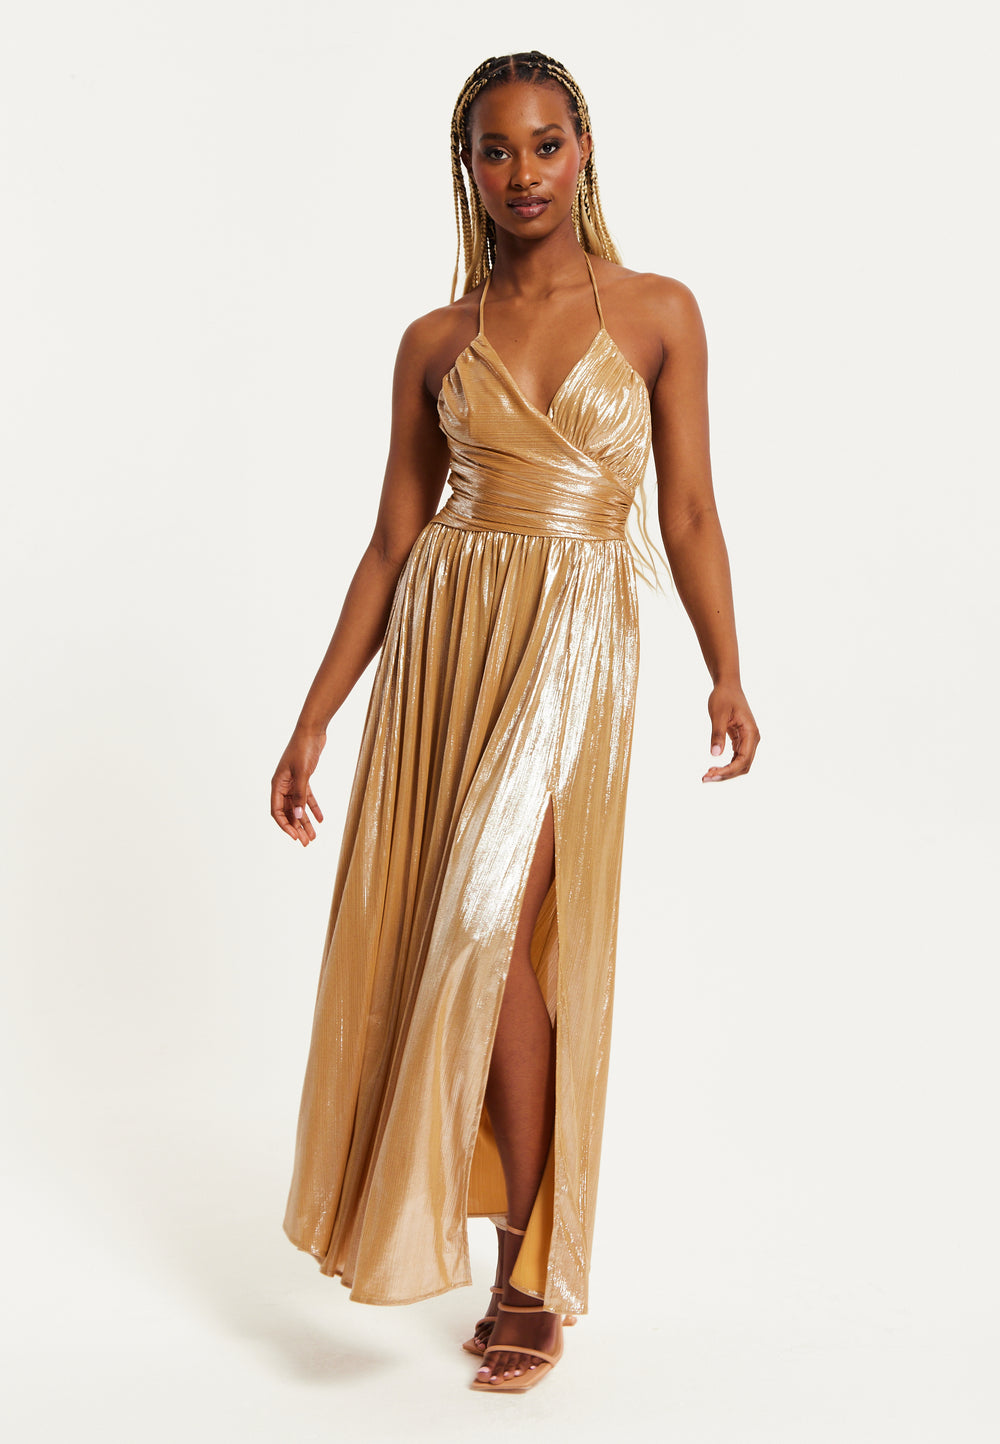 Liquorish Strapless Gold Foil Printed Jersey Maxi Dress